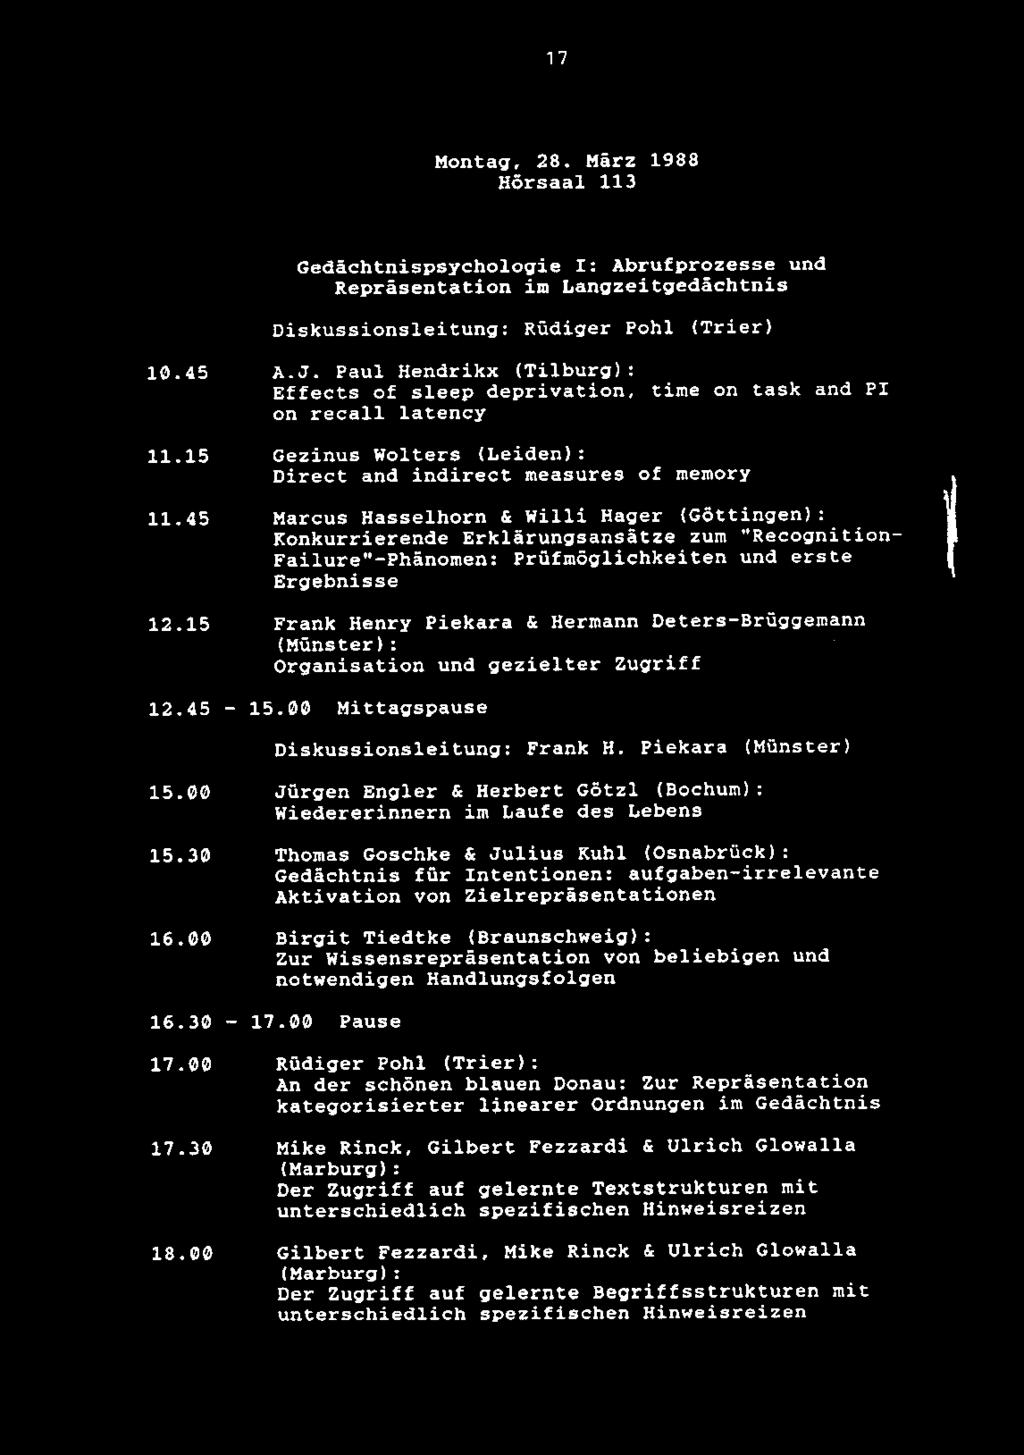 17 Montag, 28. Marz 1988 Hdrsaal 113 Gedachtnispsychologie I: Abrufprozesse und Reprasentation im Langzeitgedachtnis Diskussionsleitung: Rudiger Pohl (Trier) 10.45 A.J.